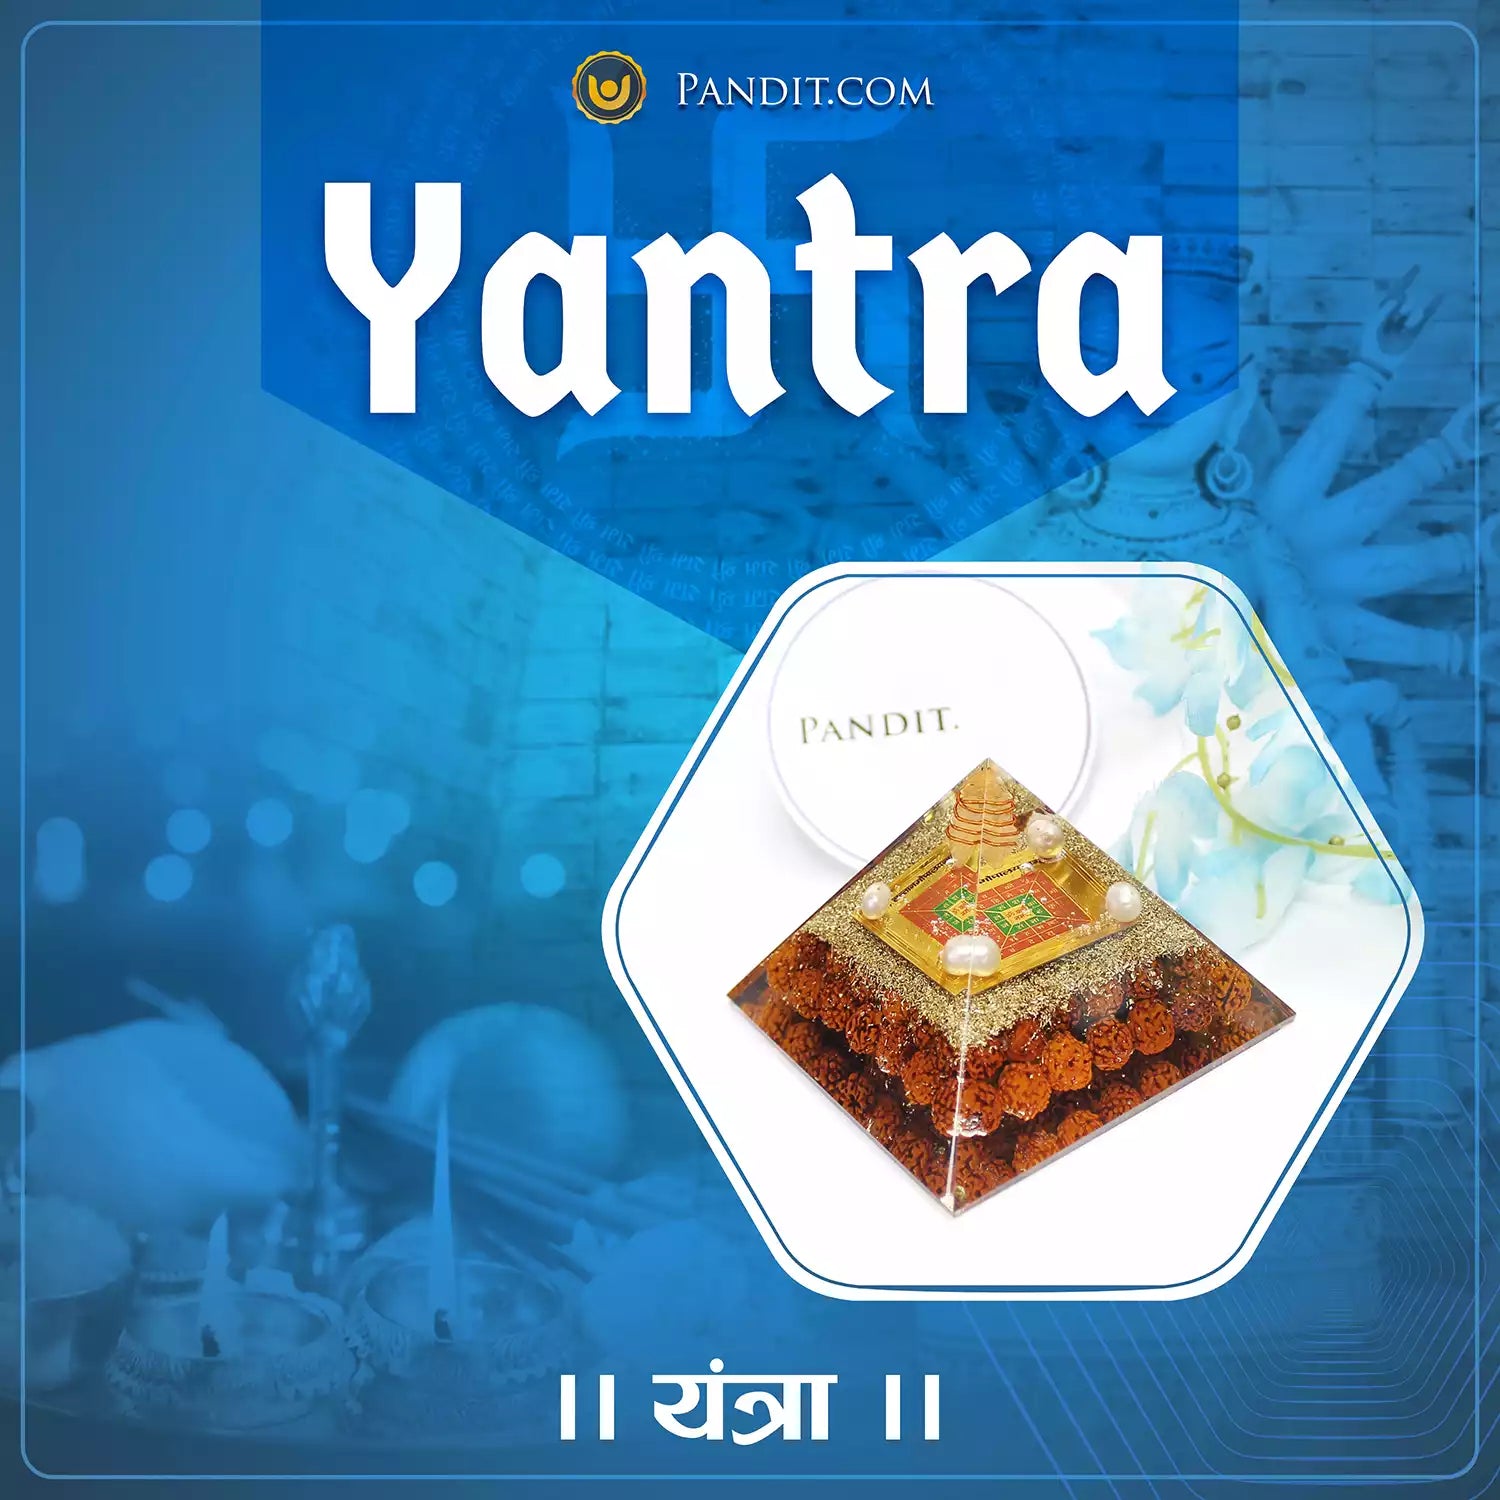 Yantra